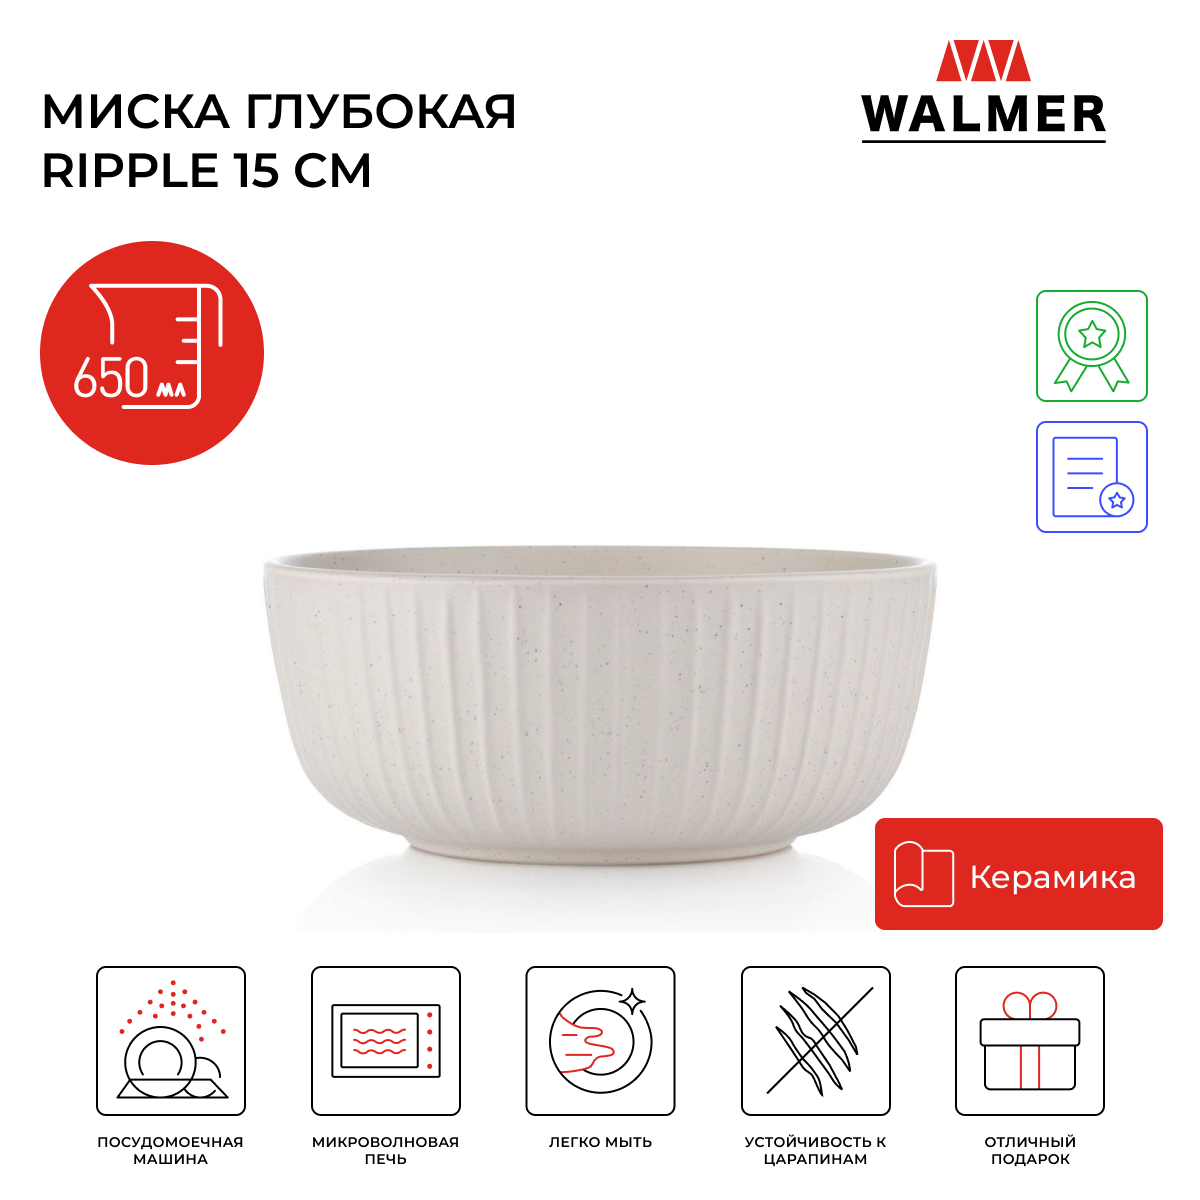 Столовая посуда Walmer - купить столовая посуда Валмер, цены на Мегамаркет